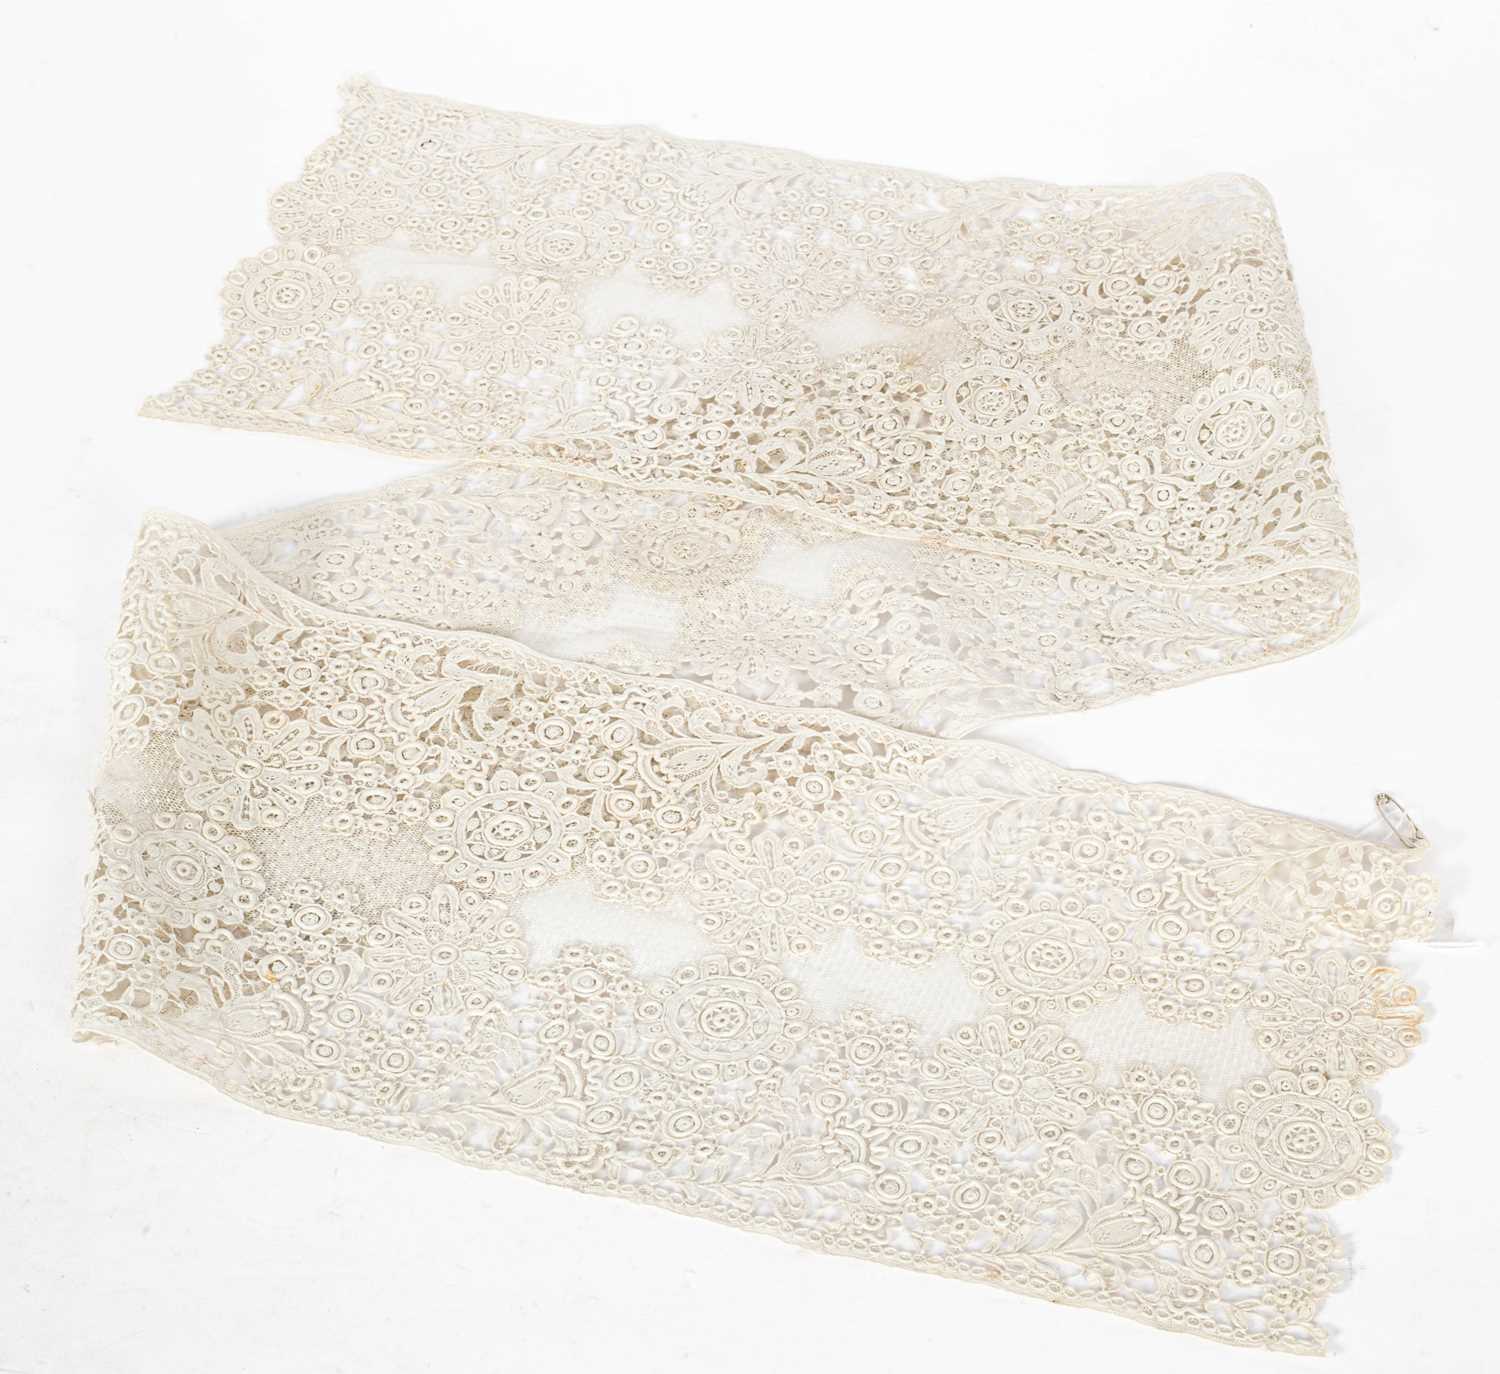 A needlepoint lace panel